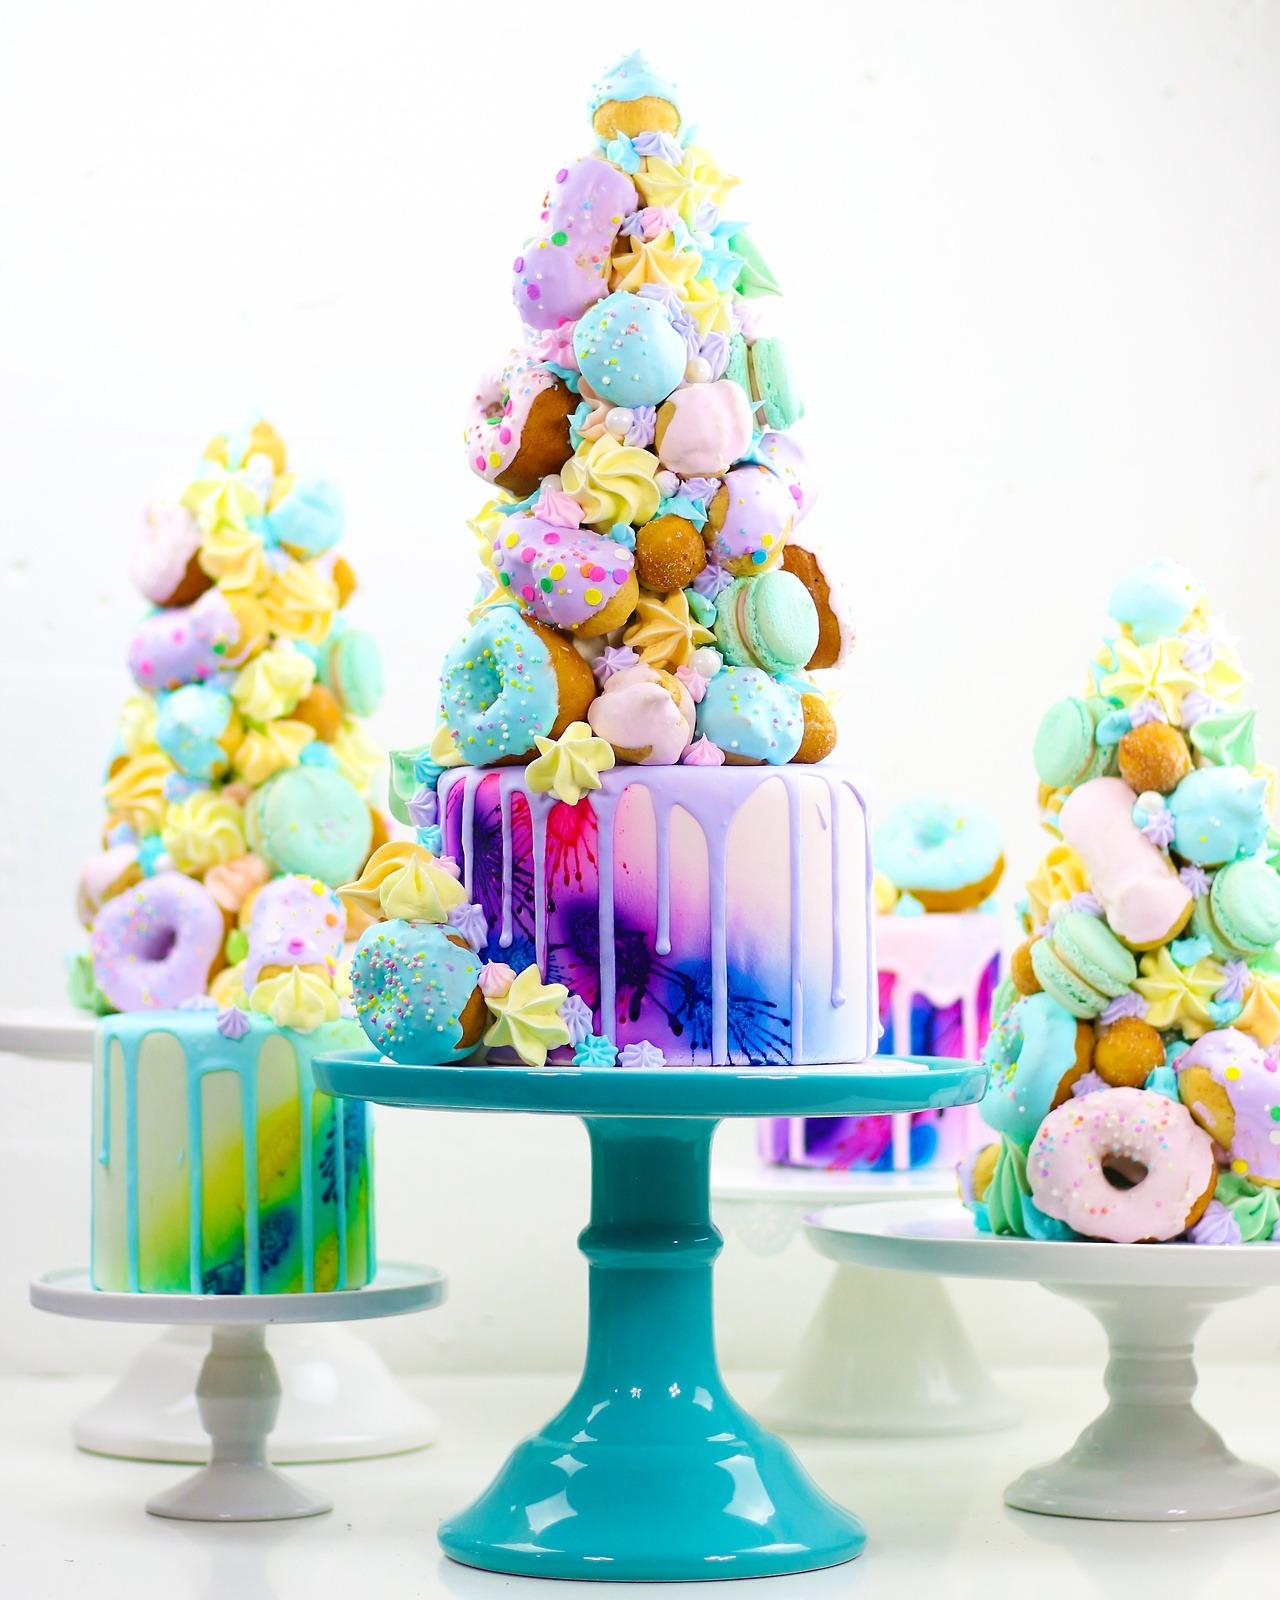 food-porn-diary:
“Tie dye sweetness overload croquembouche wedding cake dessert table
”